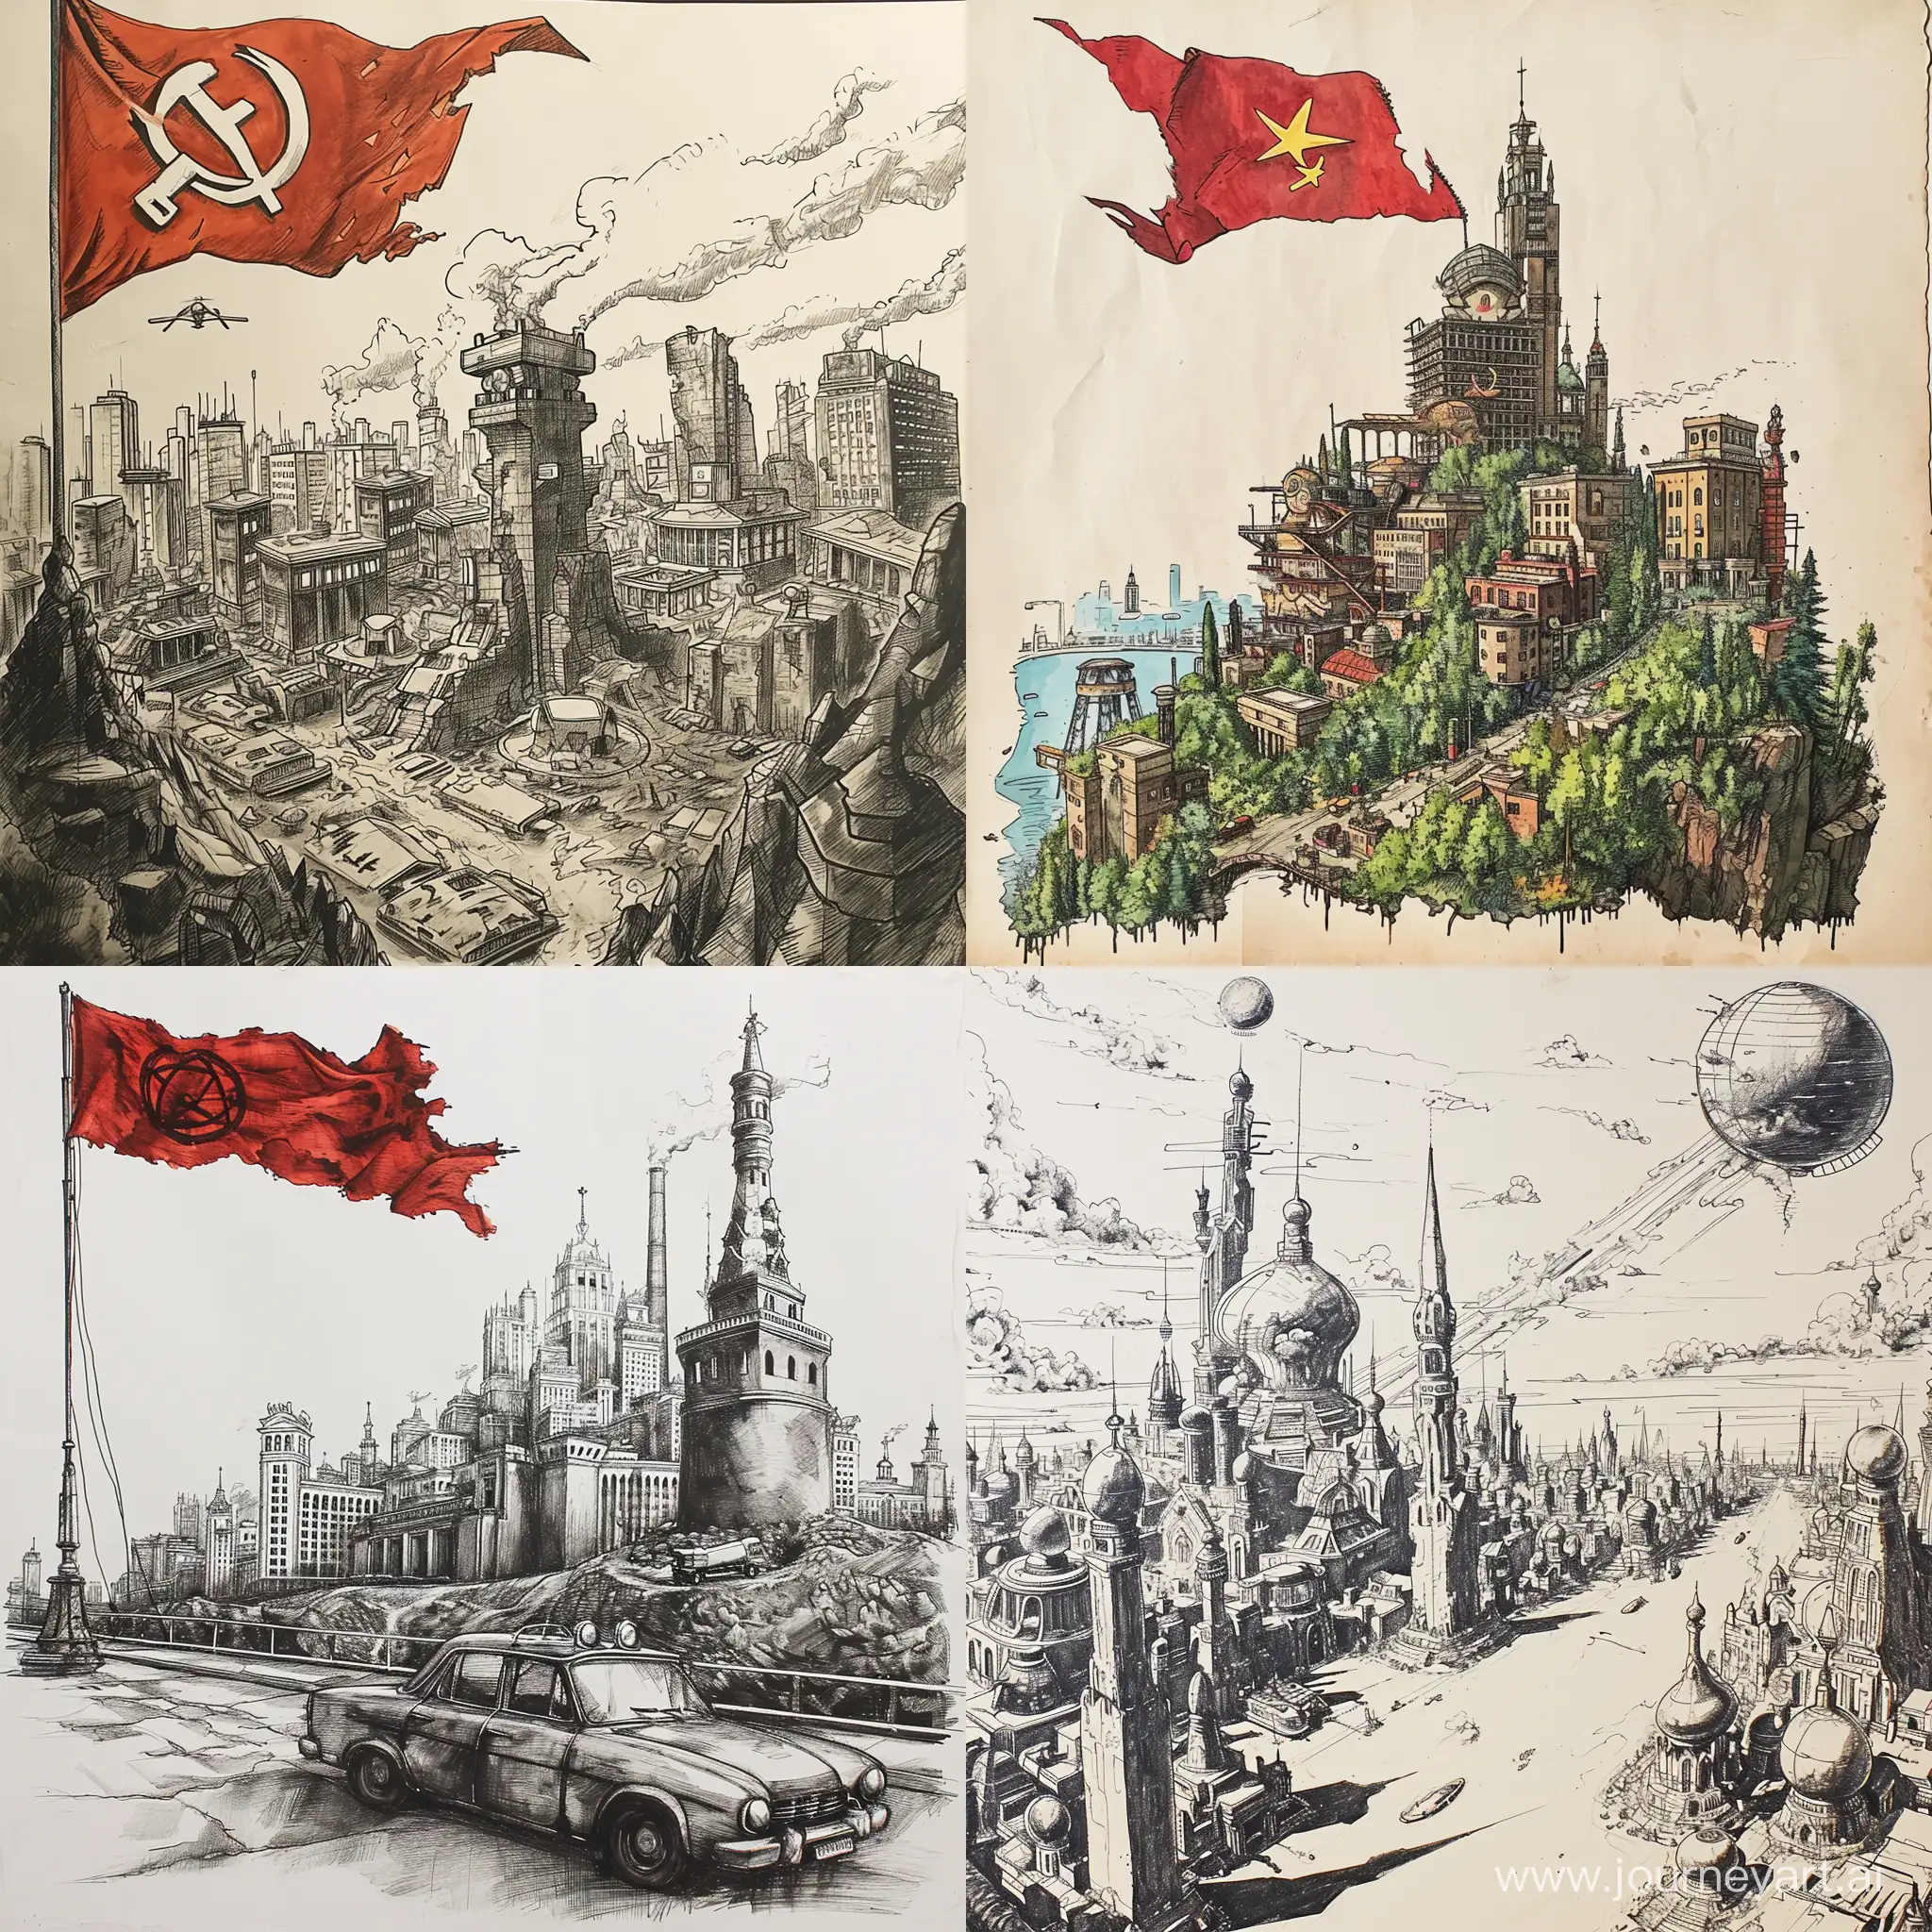 Draw a Communist utopia